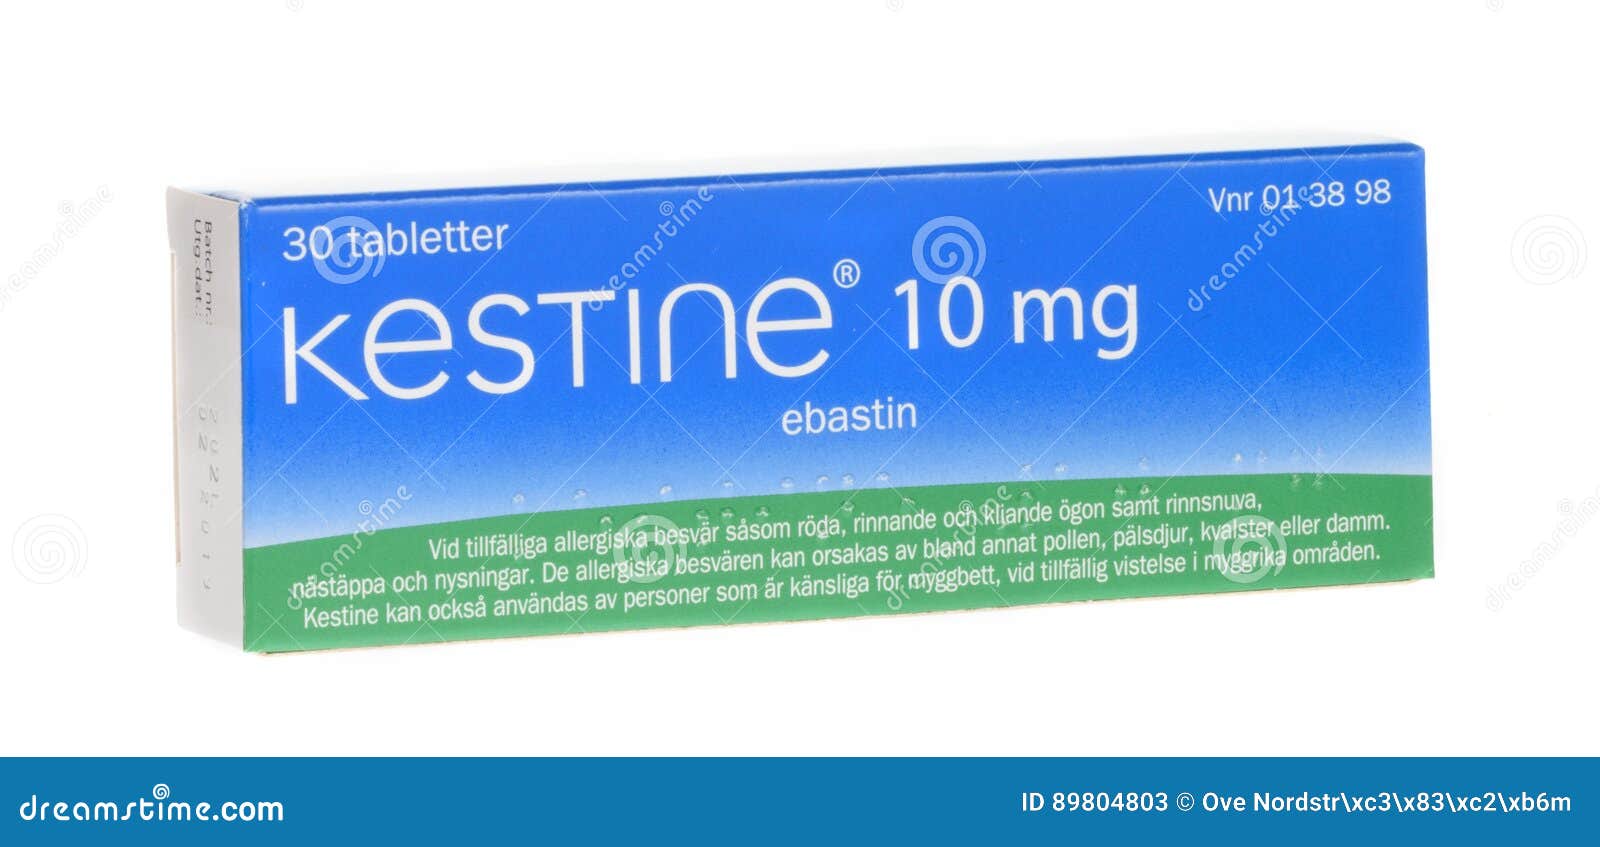 Stockholm, Sweden, April 3, 2017: Kestine 10 mg ebastin, anti-allergic medicament, isolated on white background